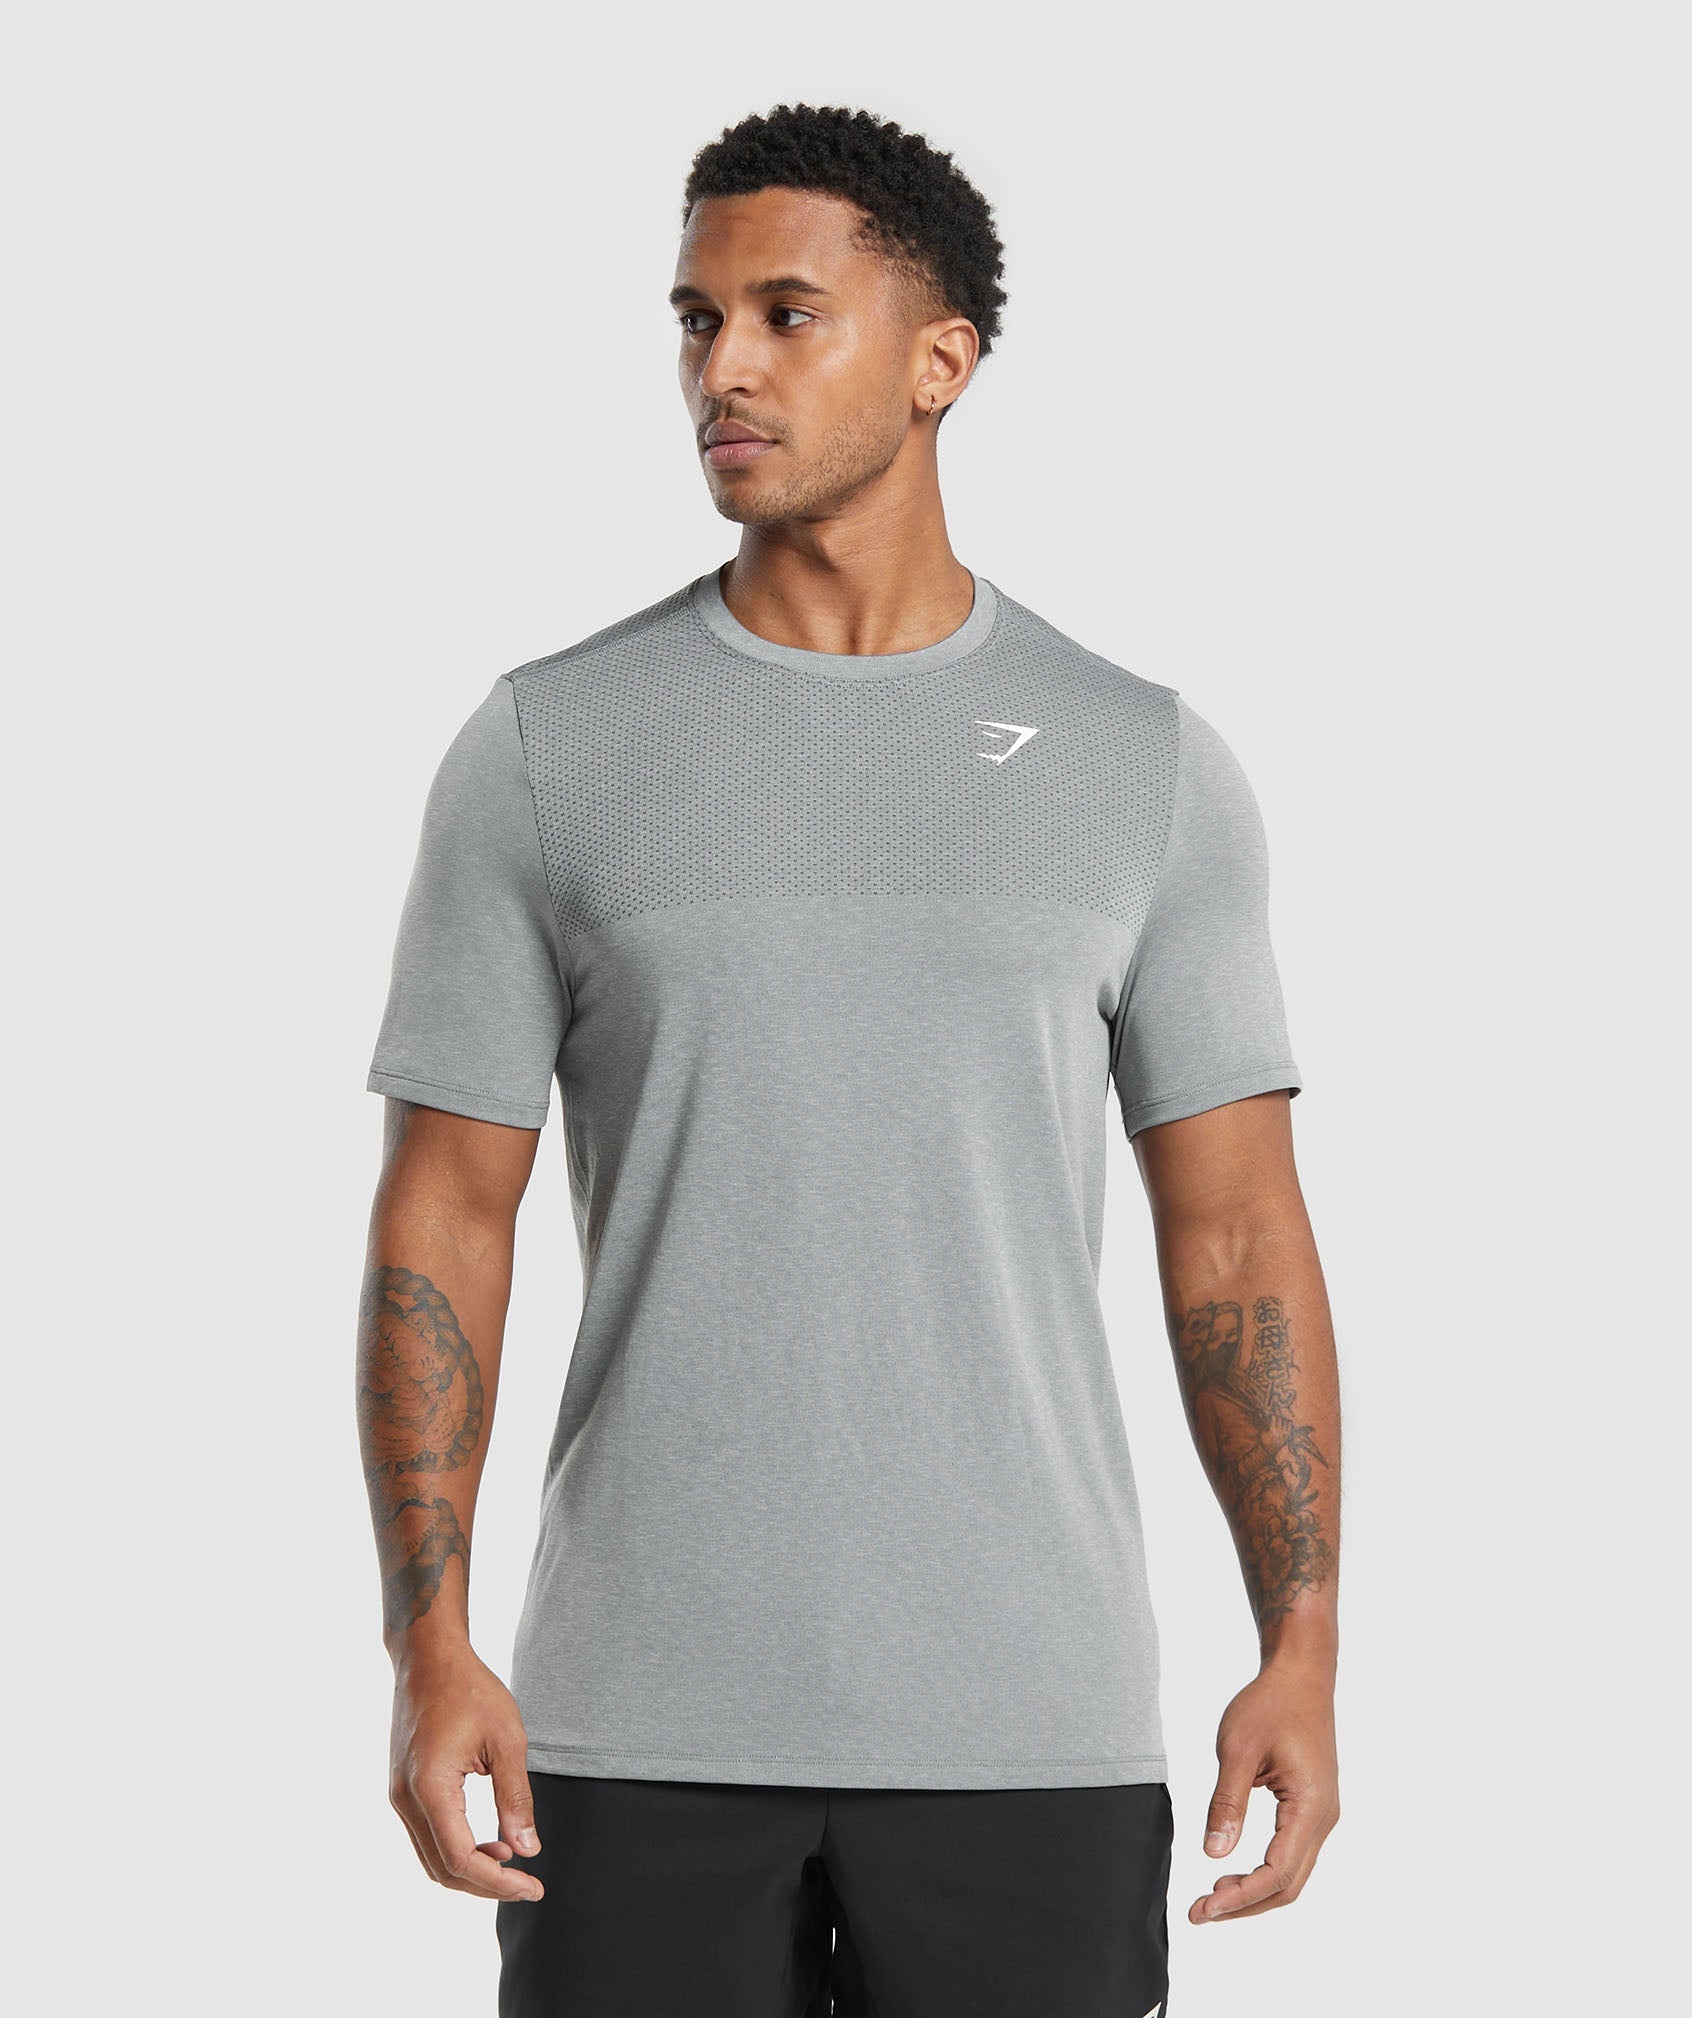 Gymshark Vital Seamless T-Shirt - Light Grey/Black Marl